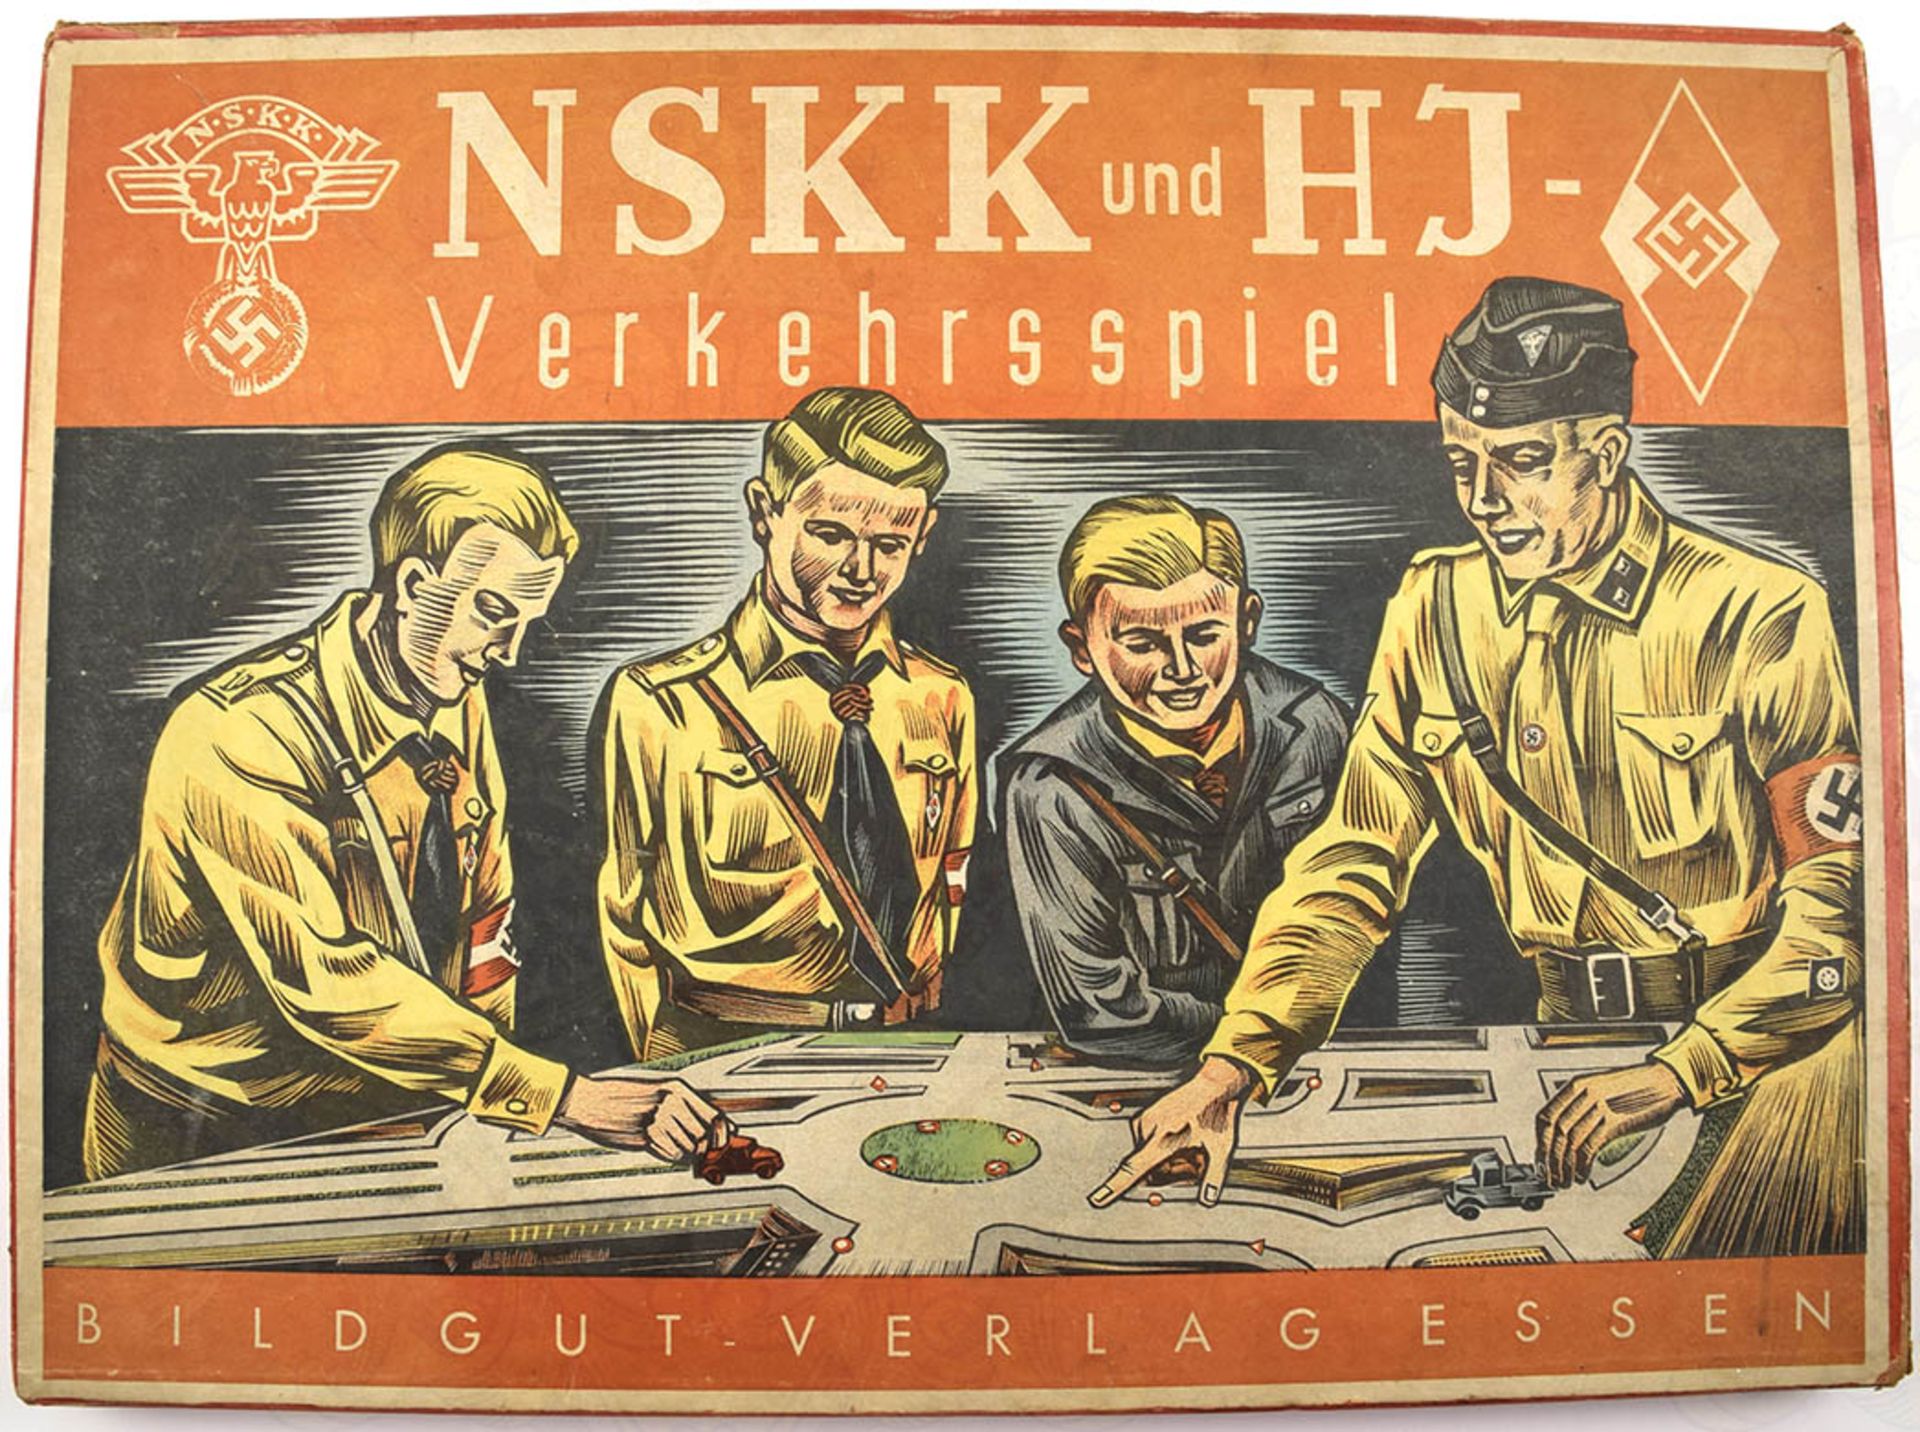 NSKK- UND HJ-VERKEHRSSPIEL, Bildgut-Verlag 1939, mehrf. gef. farbig illustr. Spielbrett, 62x84 cm, 9